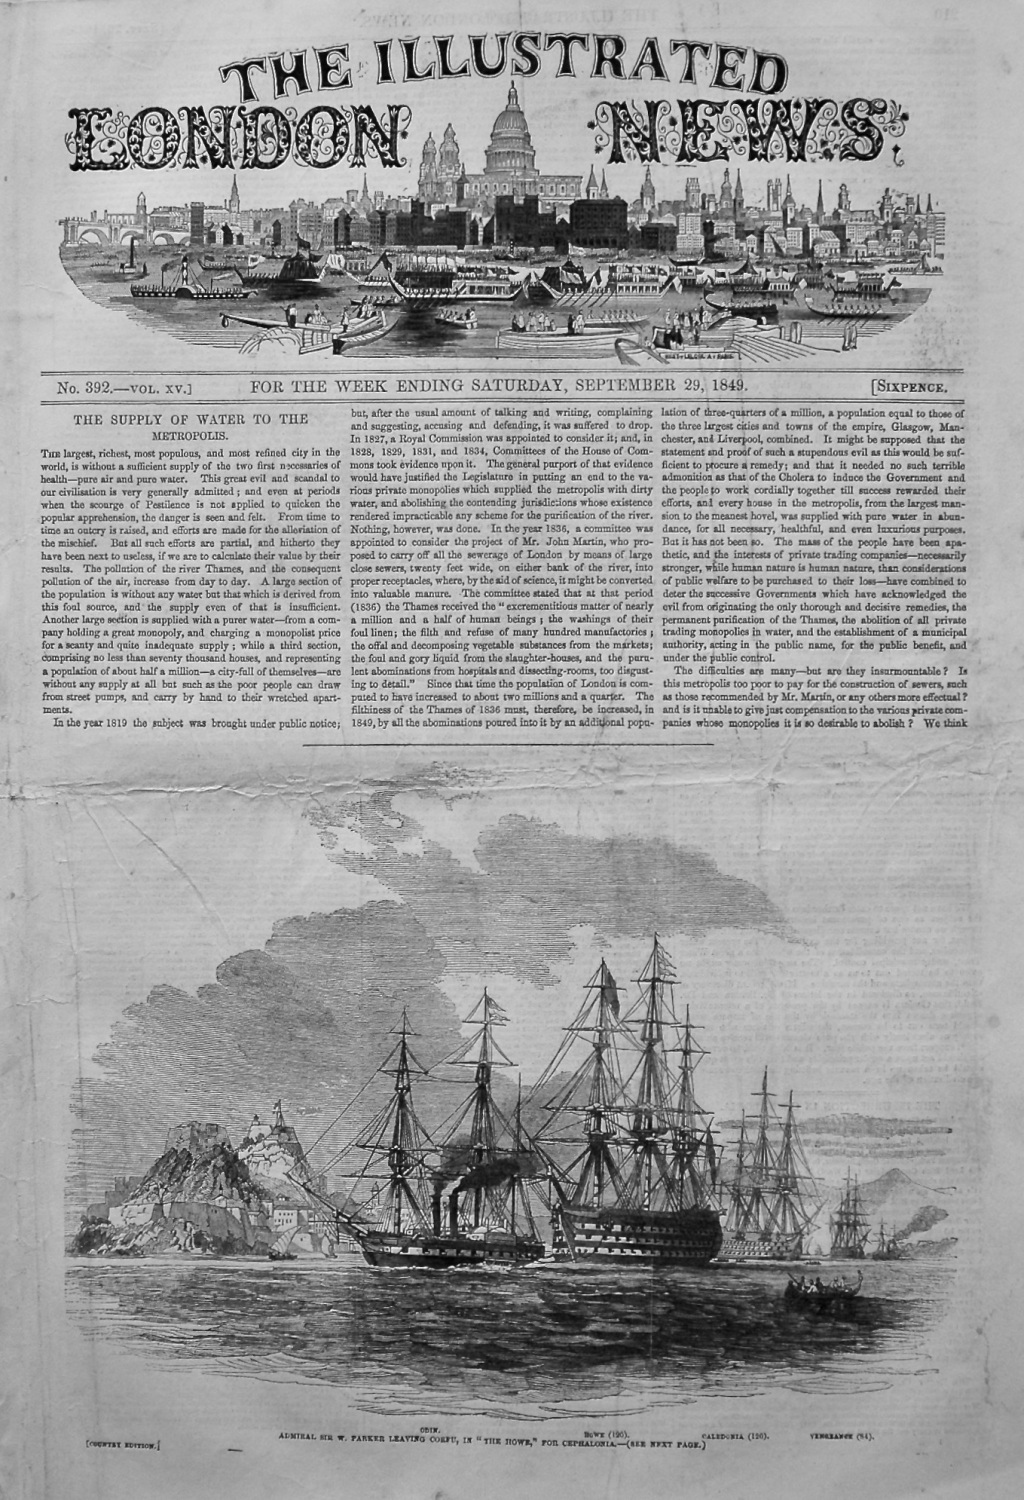 Illustrated London News. September 29th, 1849.